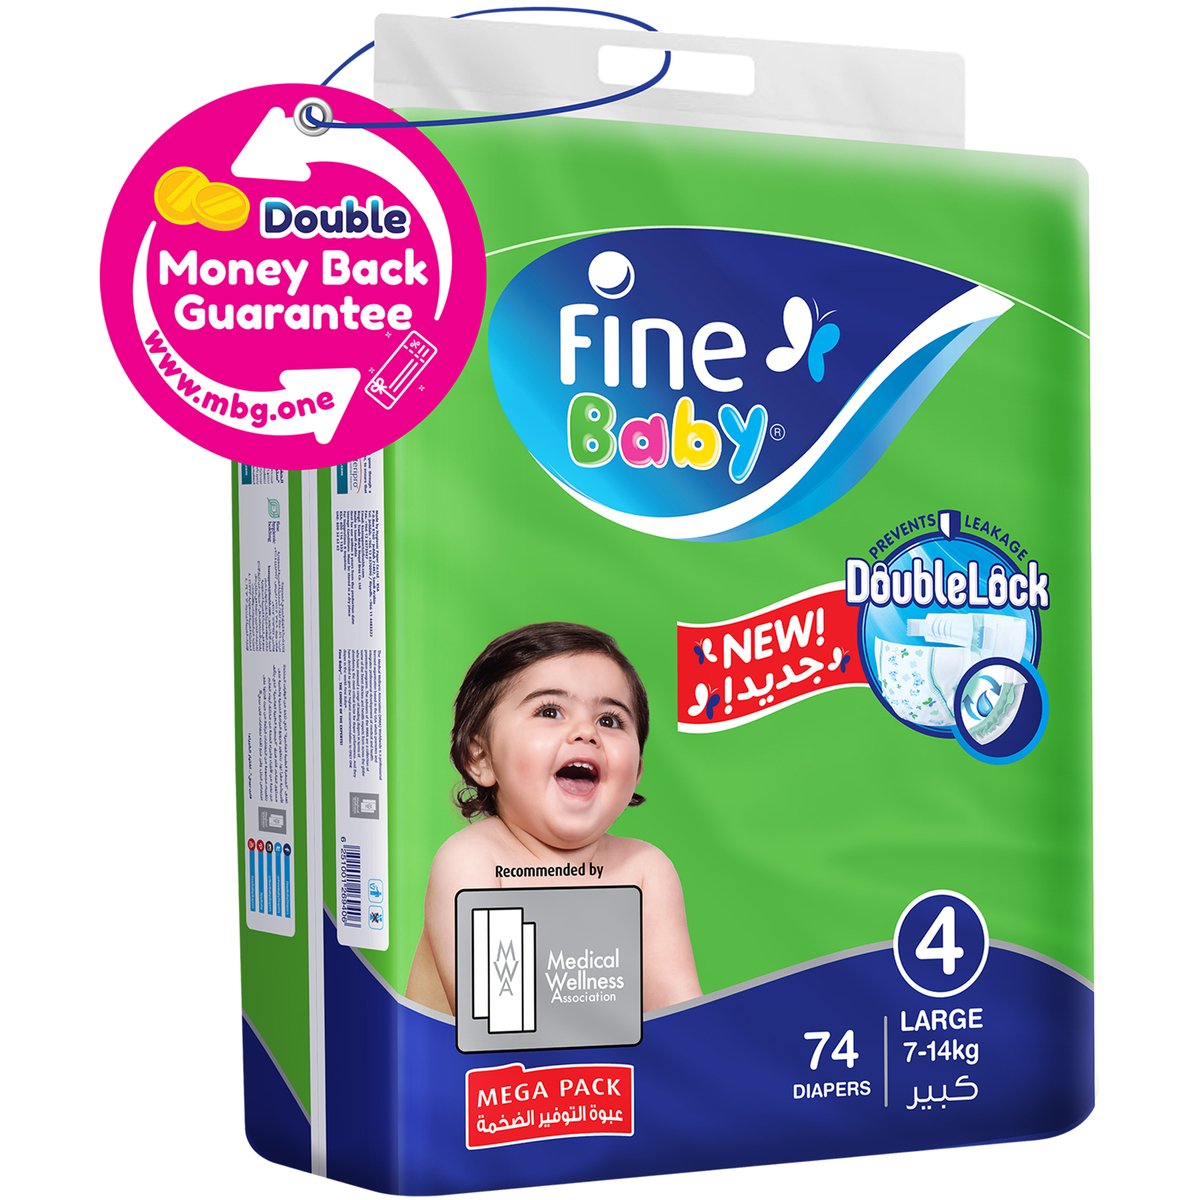 Fine Baby Diapers Size 4 Large 7-14kg Mega Pack 74pcs